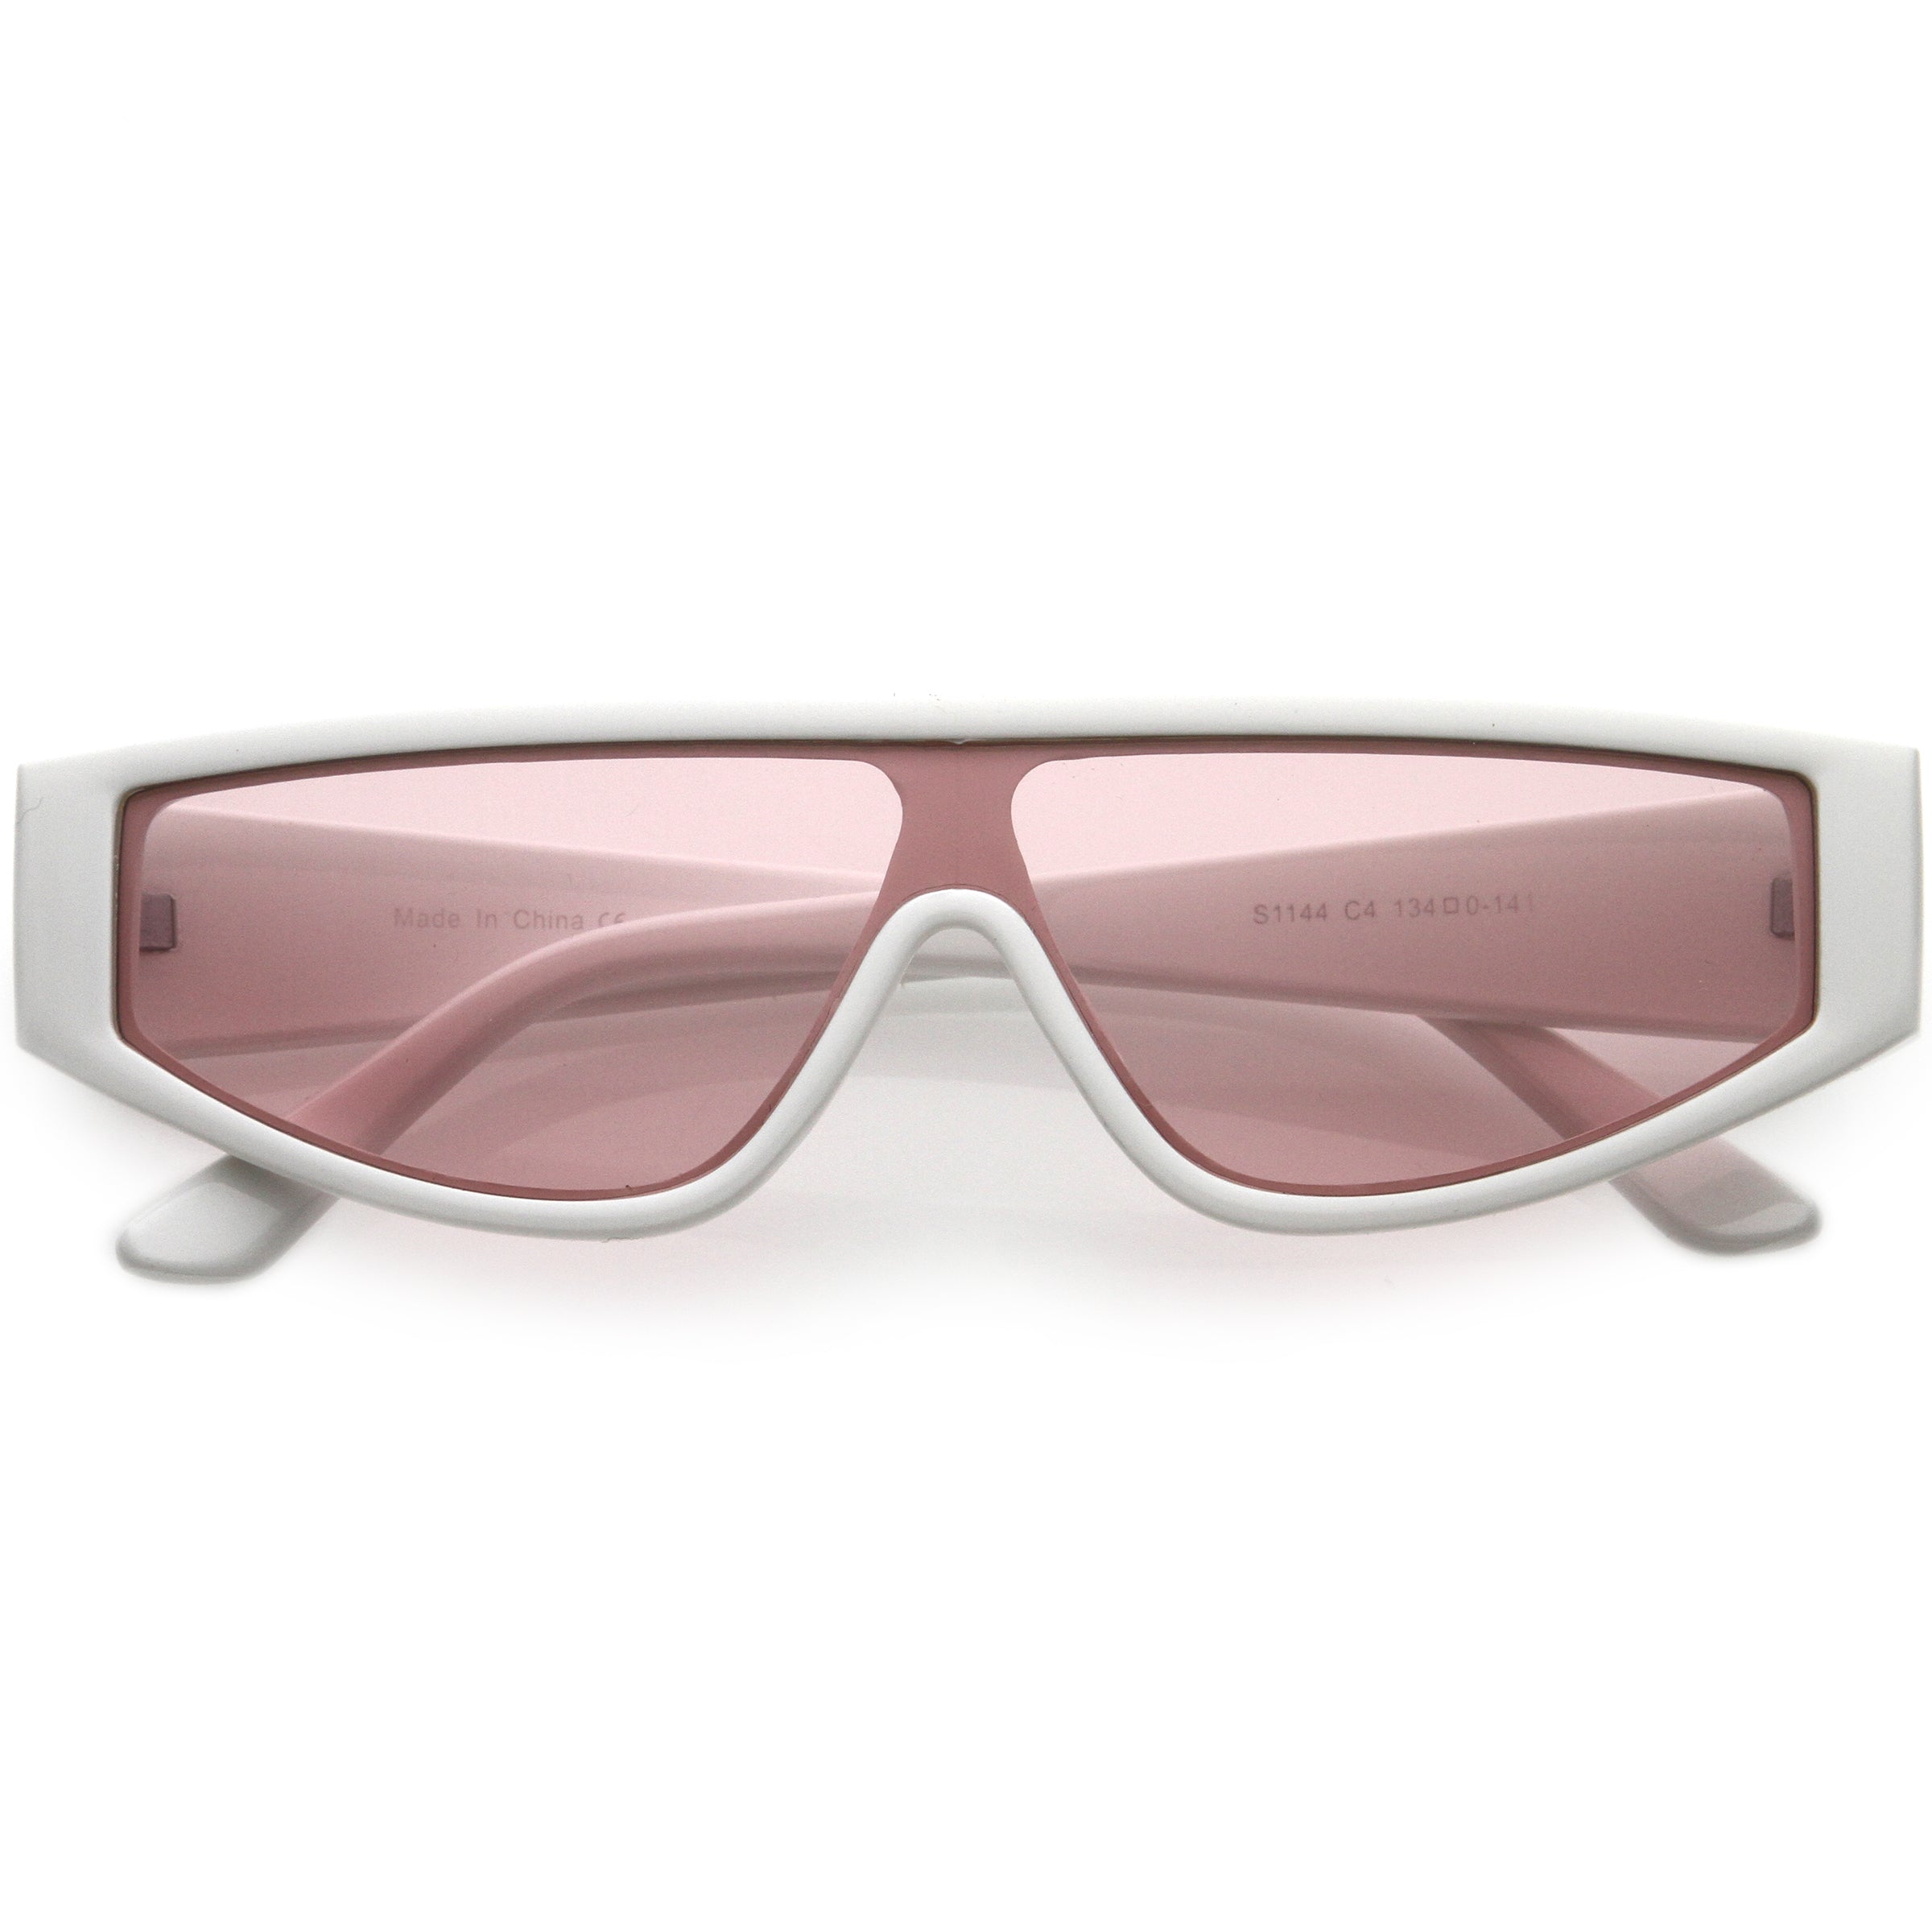 Cyber Chunky Flat Top Shield Mono Lens Sunglasses D107